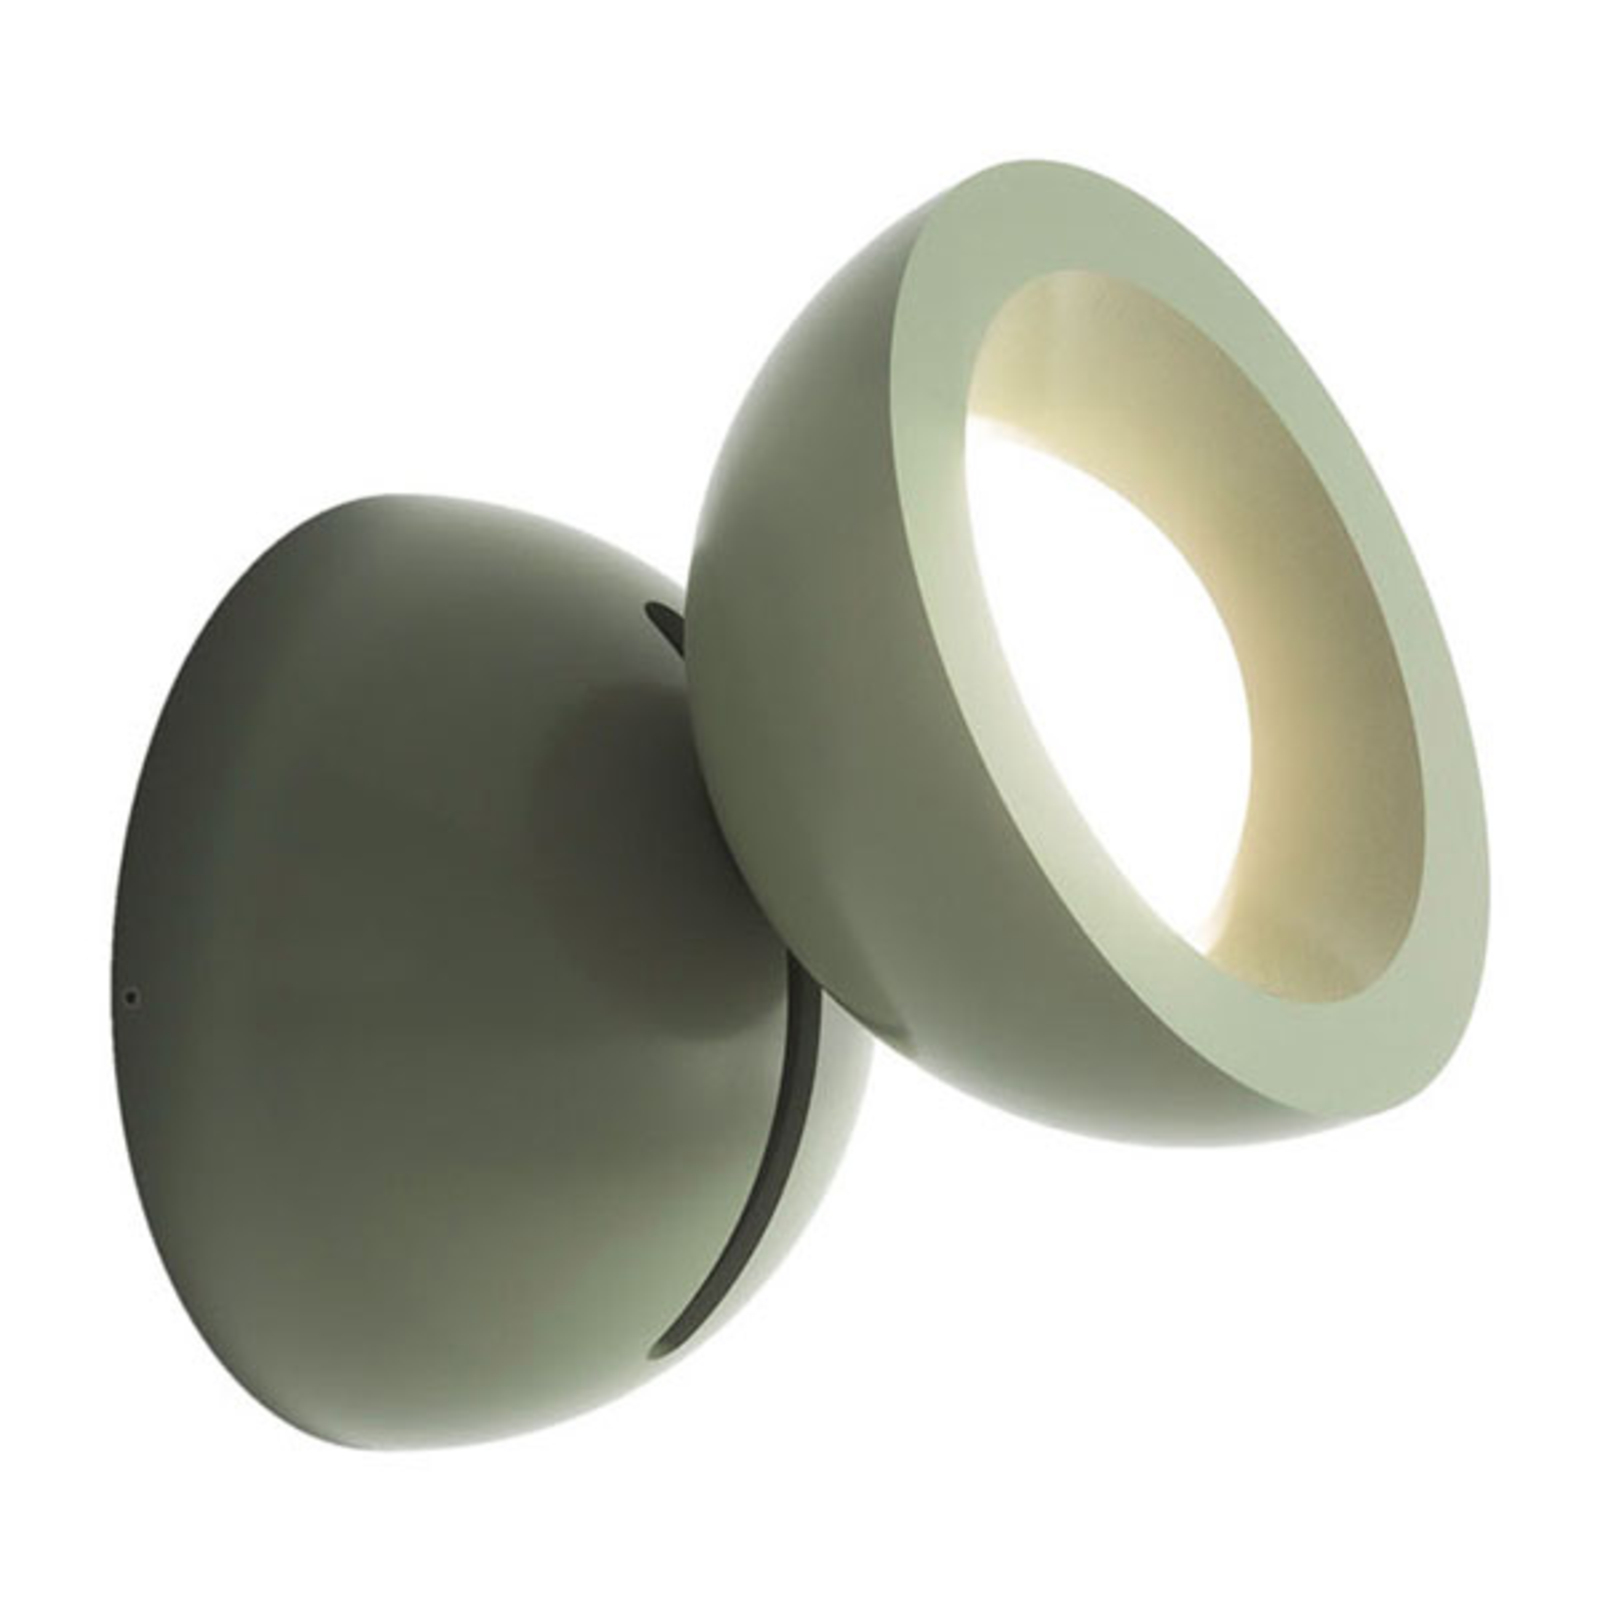 Axolight DoDot LED wandlamp, groen15°